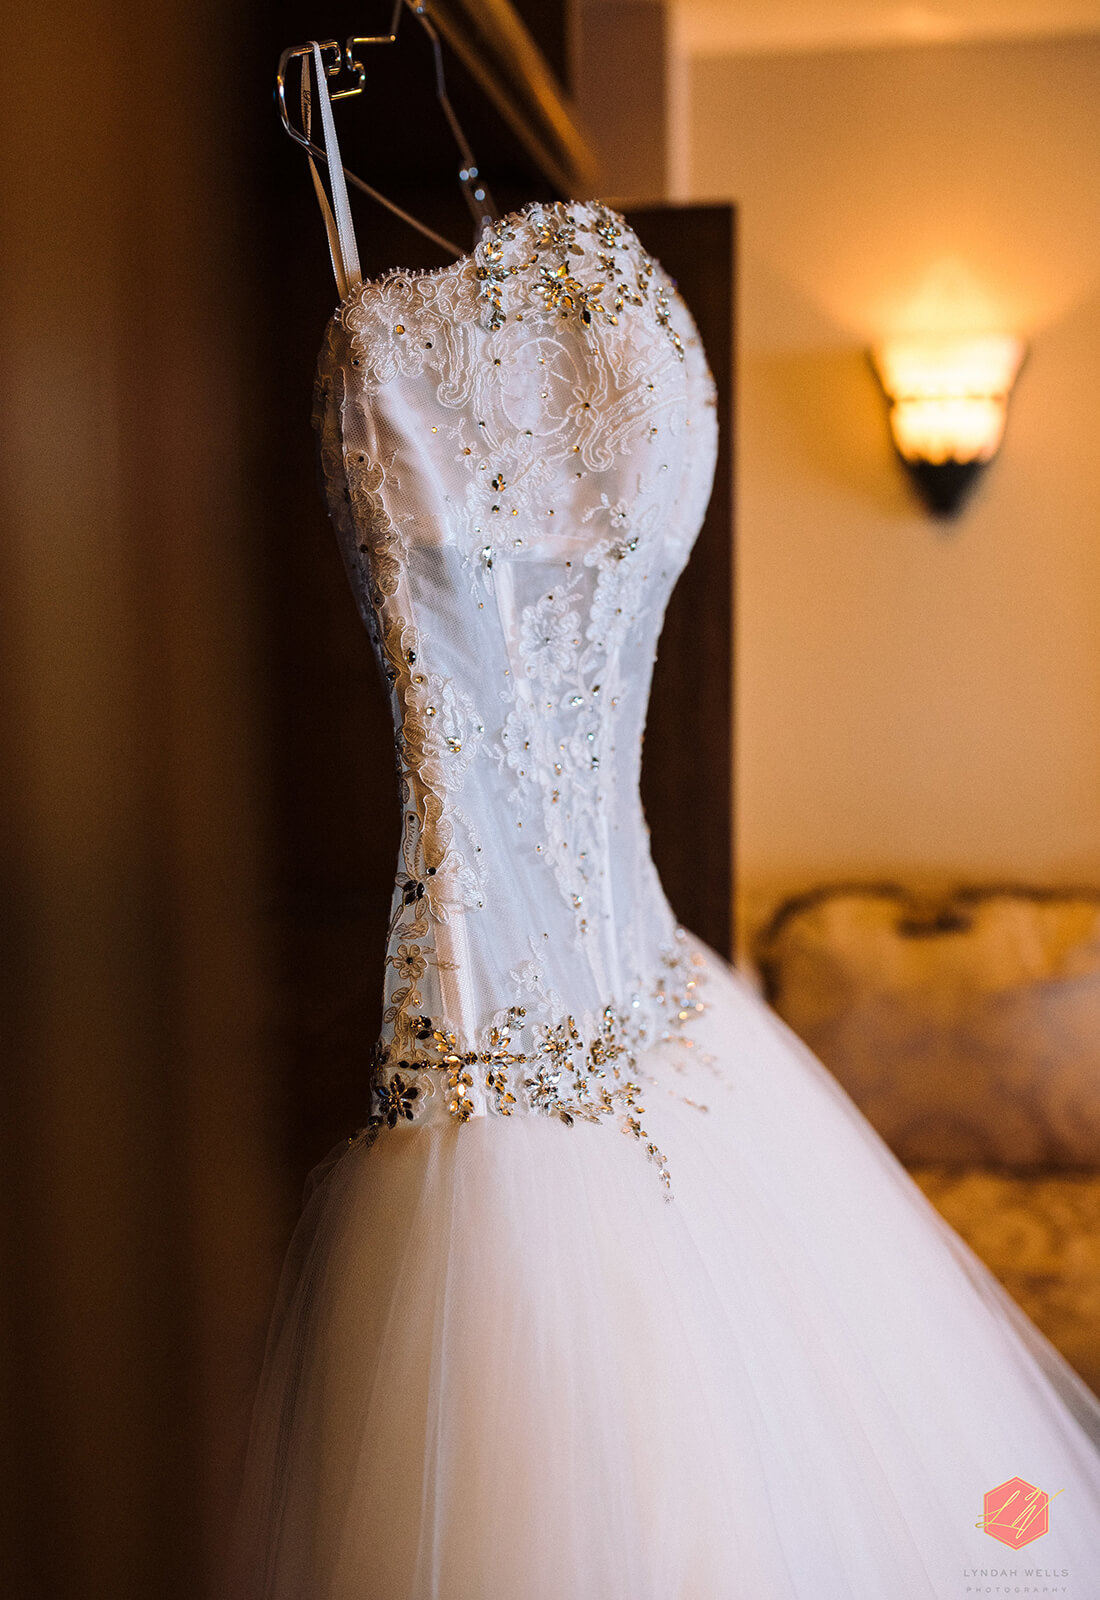 Stunning lace drop-waist ballgown Pronovias wedding dress